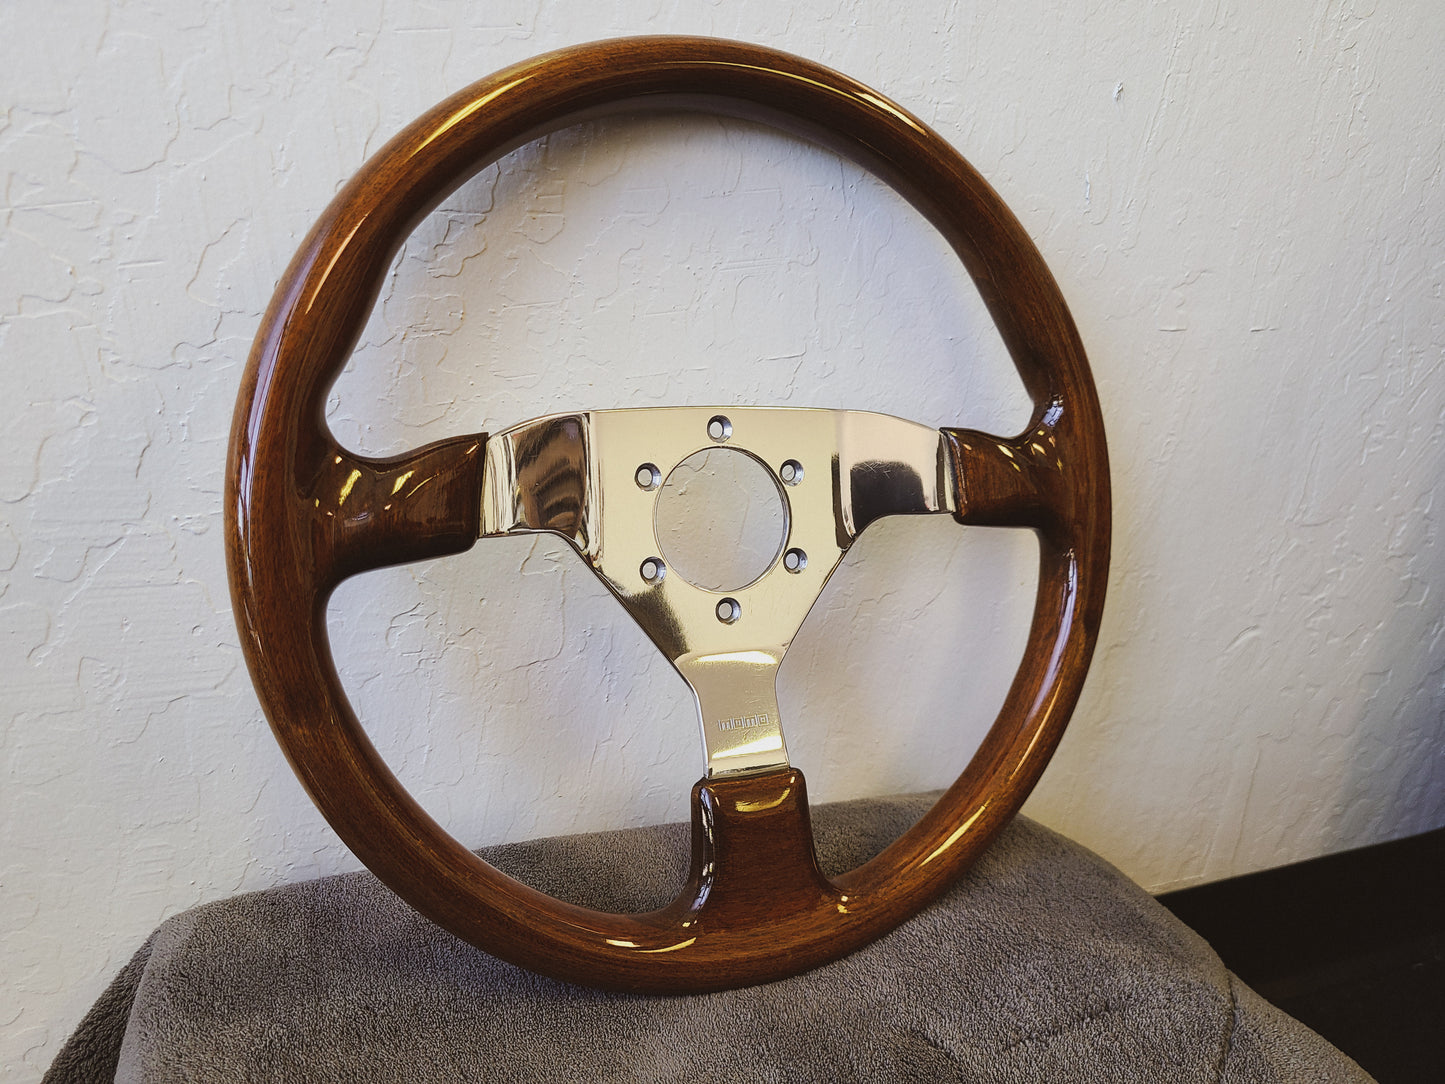 MOMO polished wood steering wheel